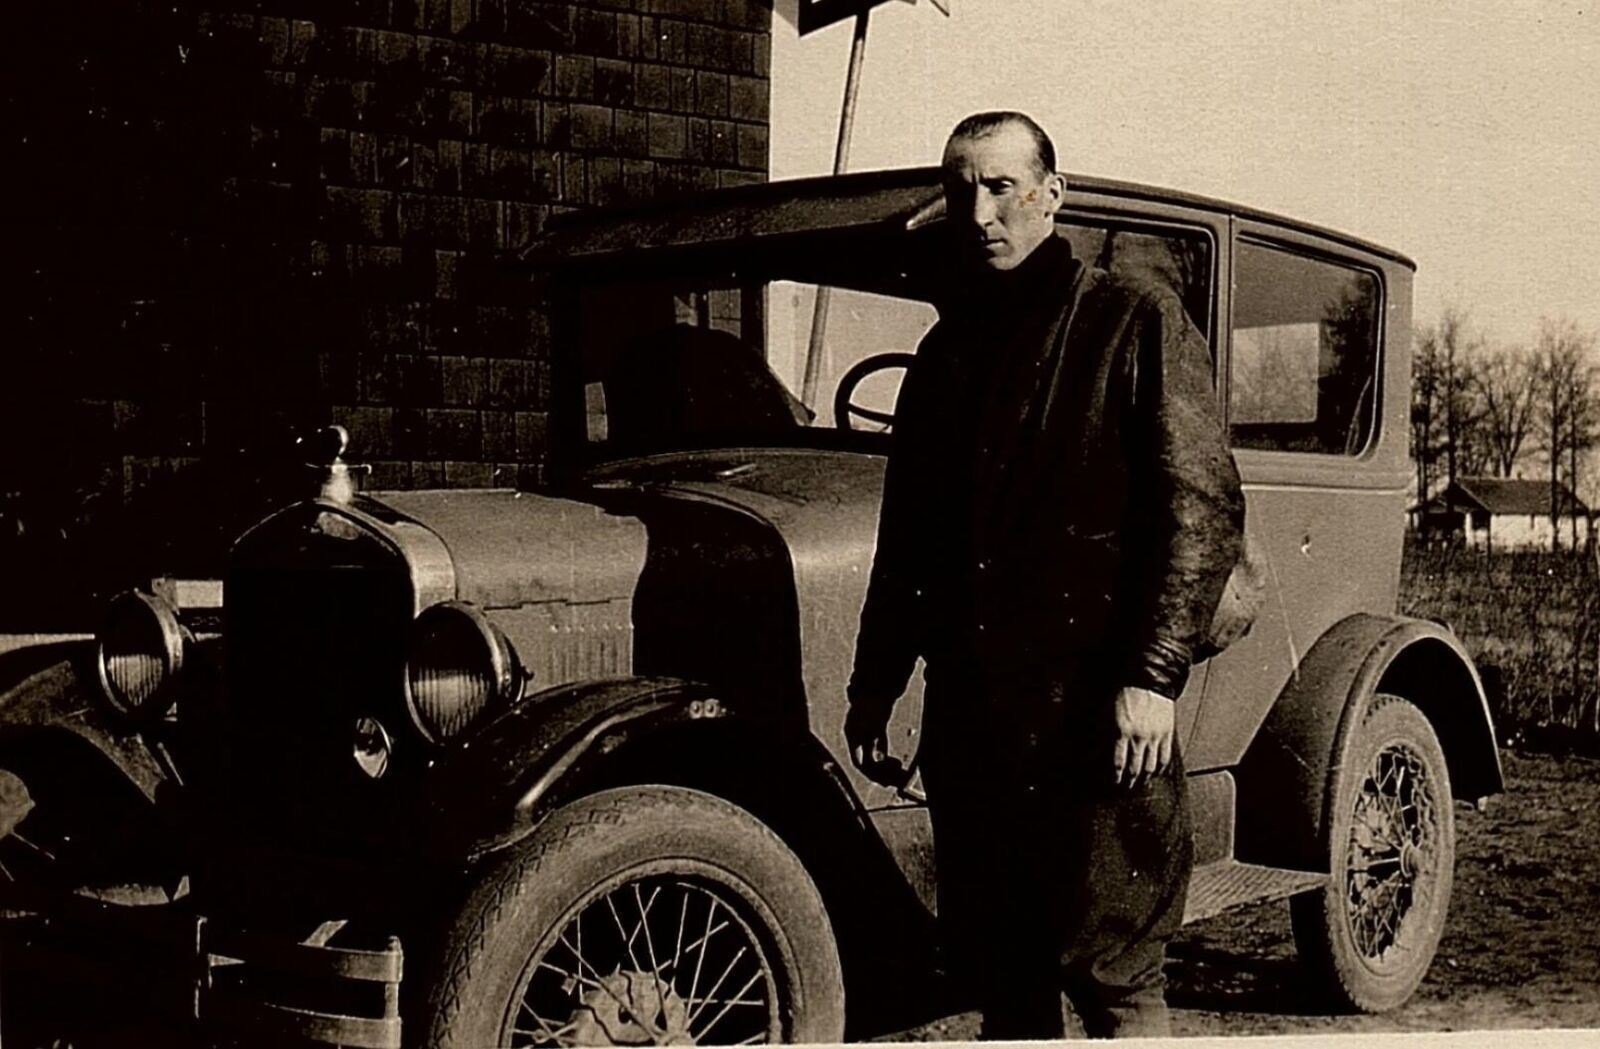 1929 FORD MODEL A TUDOR SEDAN OHIO PLATES OWNER LEATHER JACKET PHOTOGRAPH 34-150